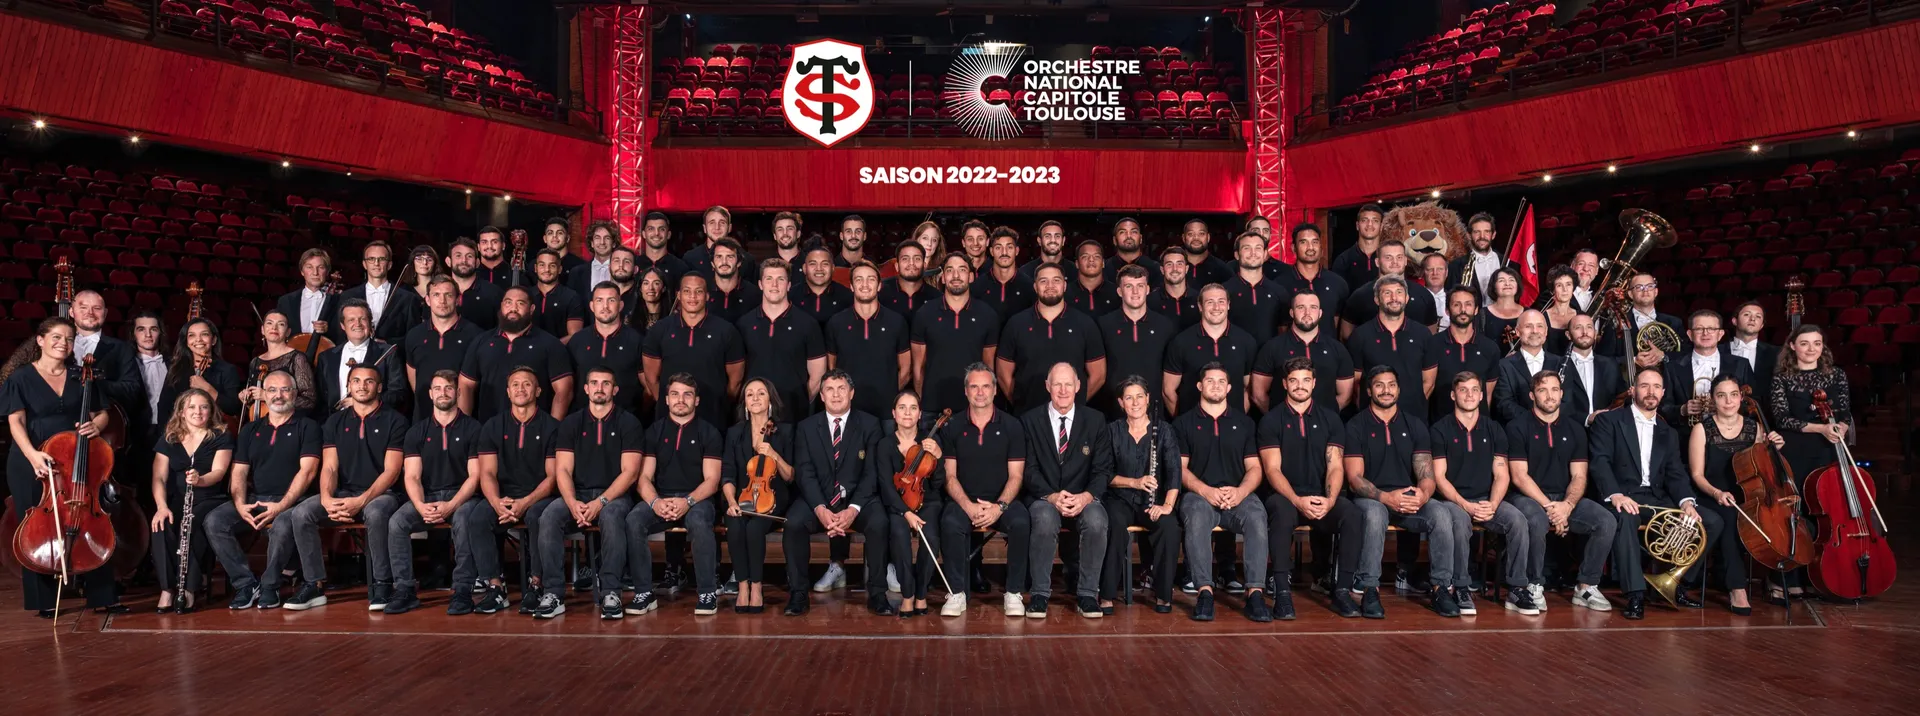 Orchestre National Toulouse Capitole 2022-2023